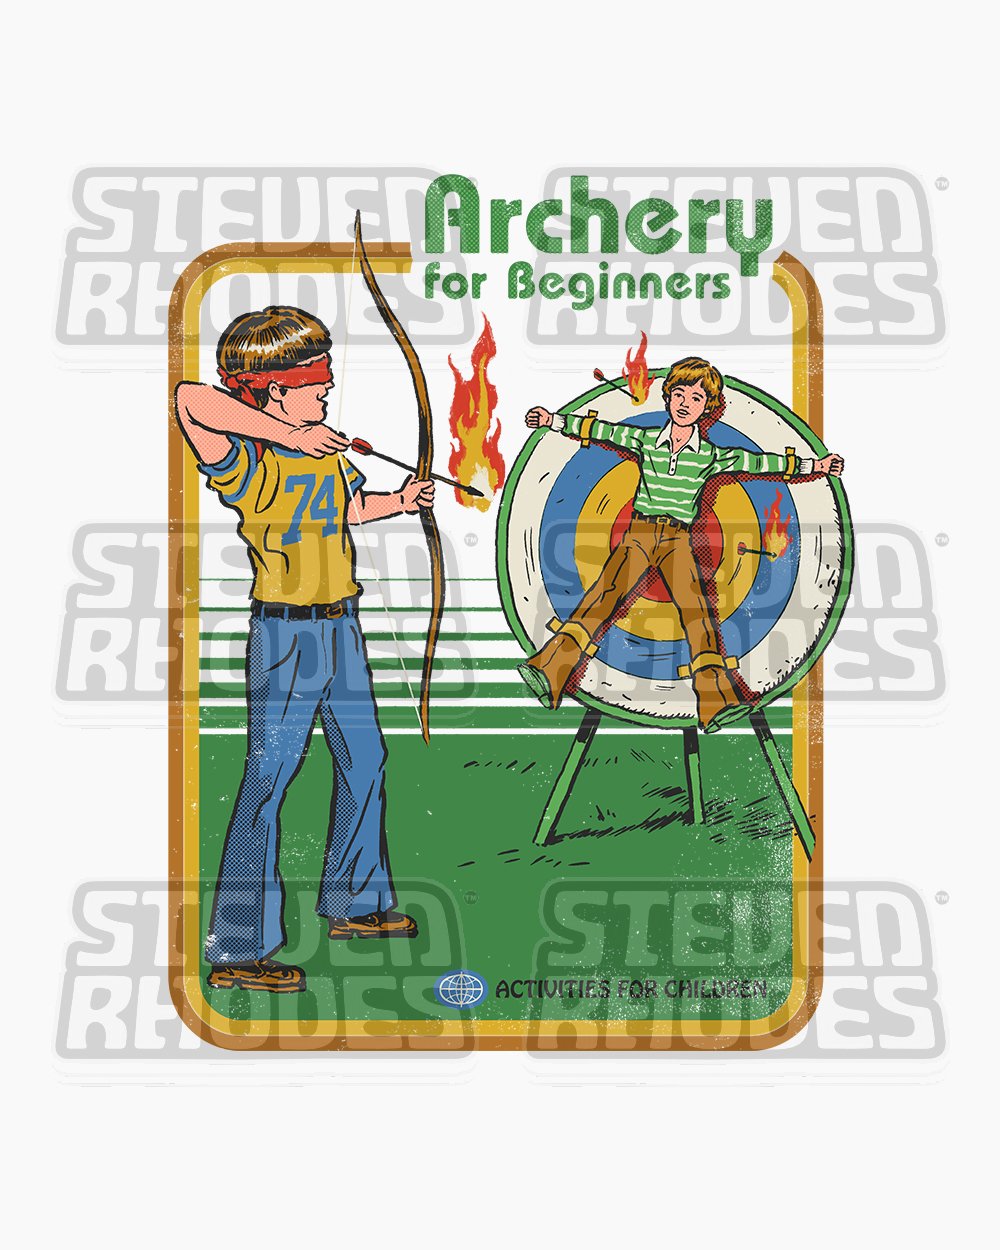 Archery for Beginners Sweater Australia Online #colour_white